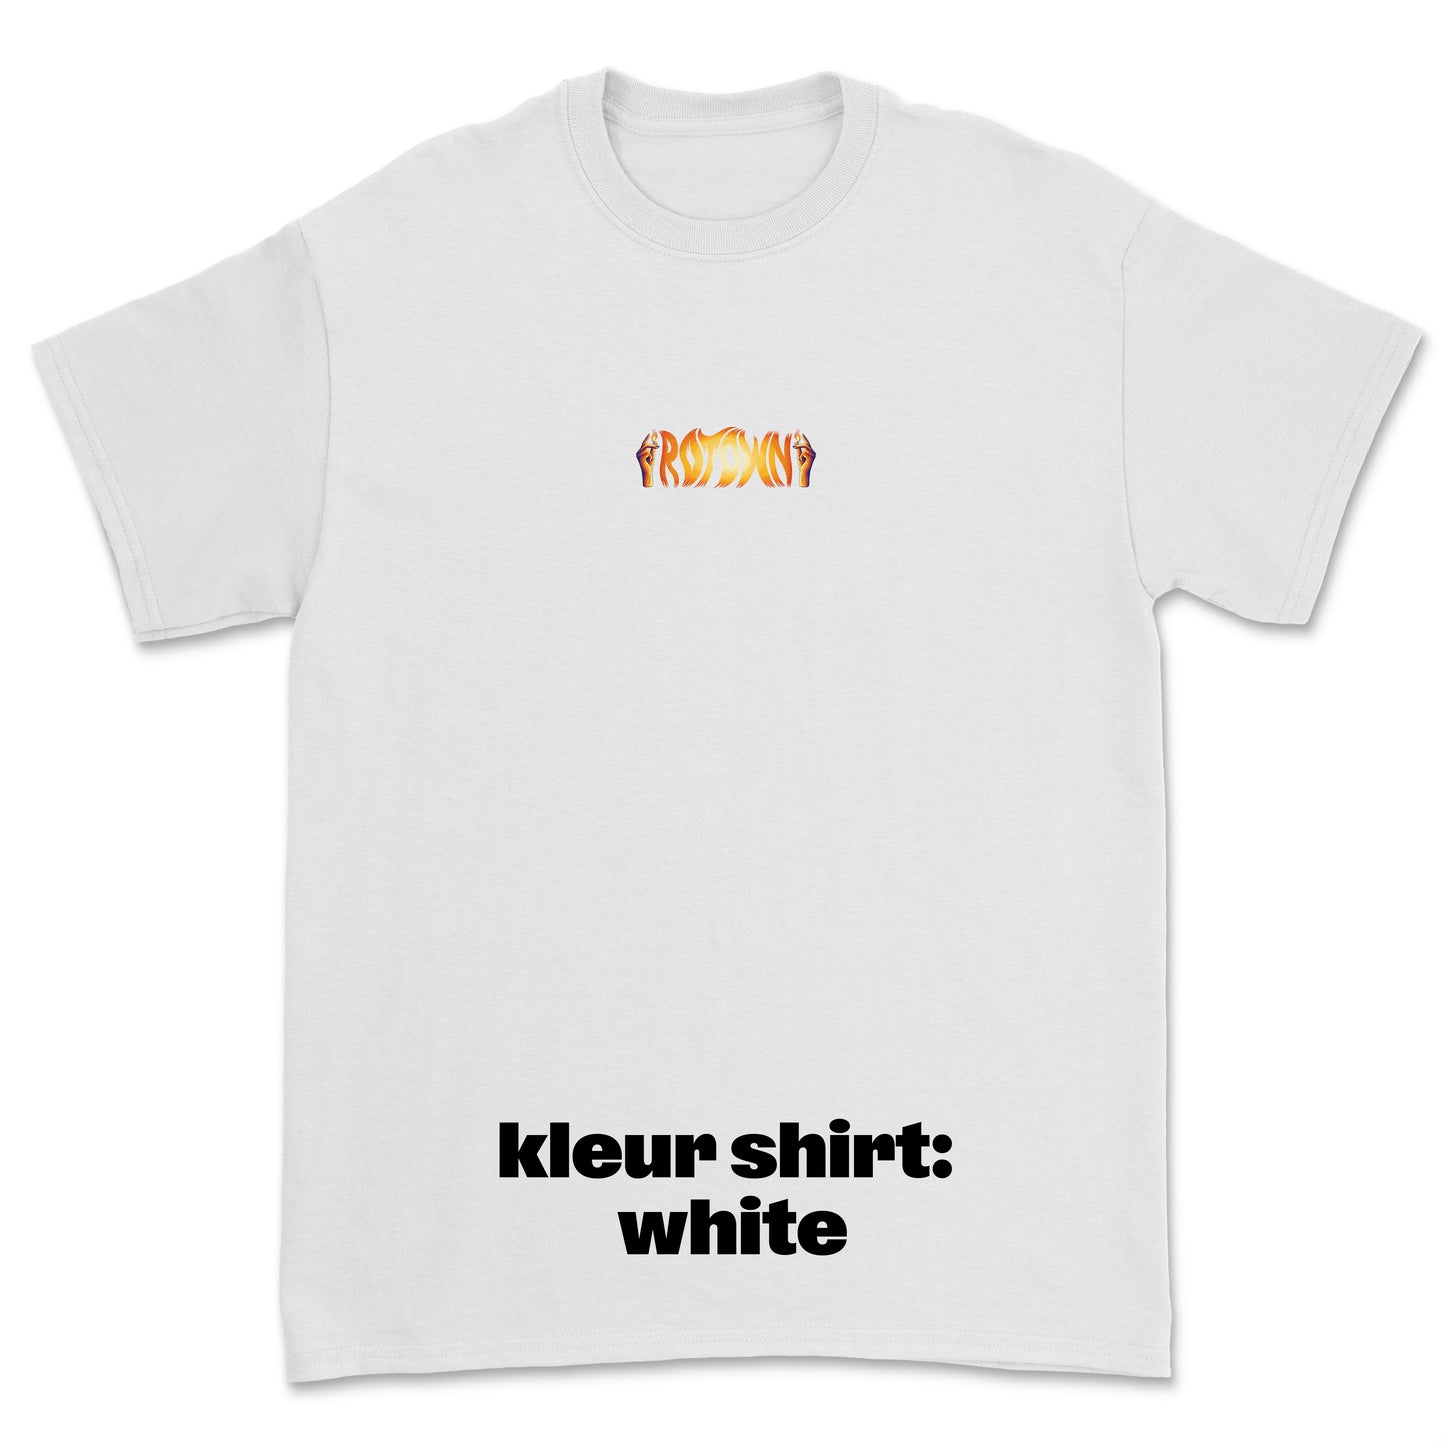 T-shirt 'Rotown Vuur' • klein oranje logo midden